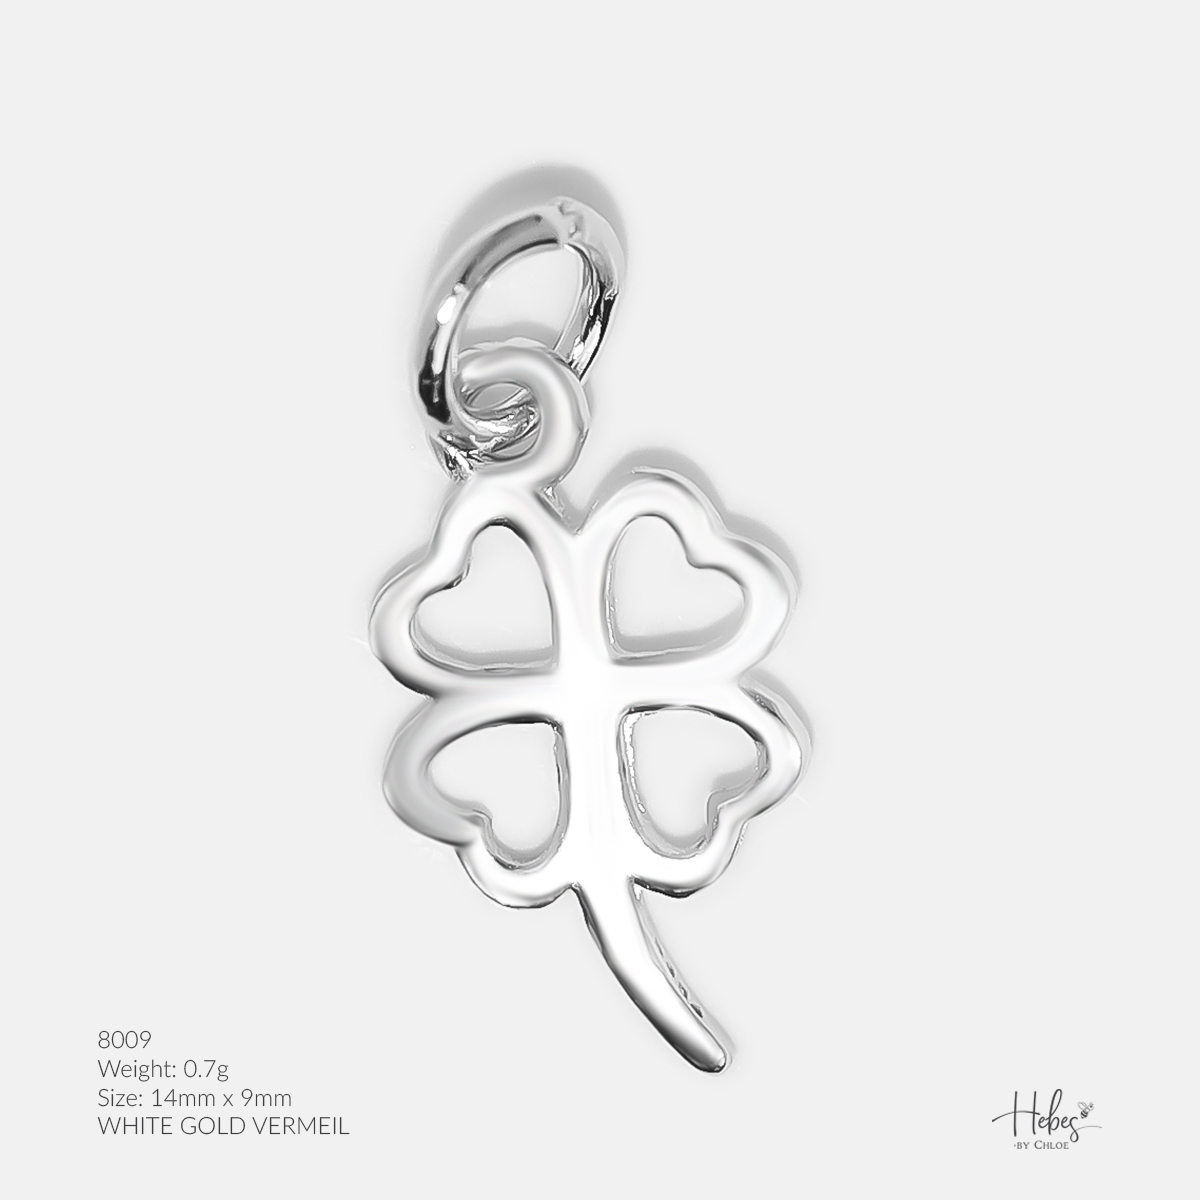 Hebes Vermeil Charm Four Leaves Clover 8009 Healing Crystal Bracelets